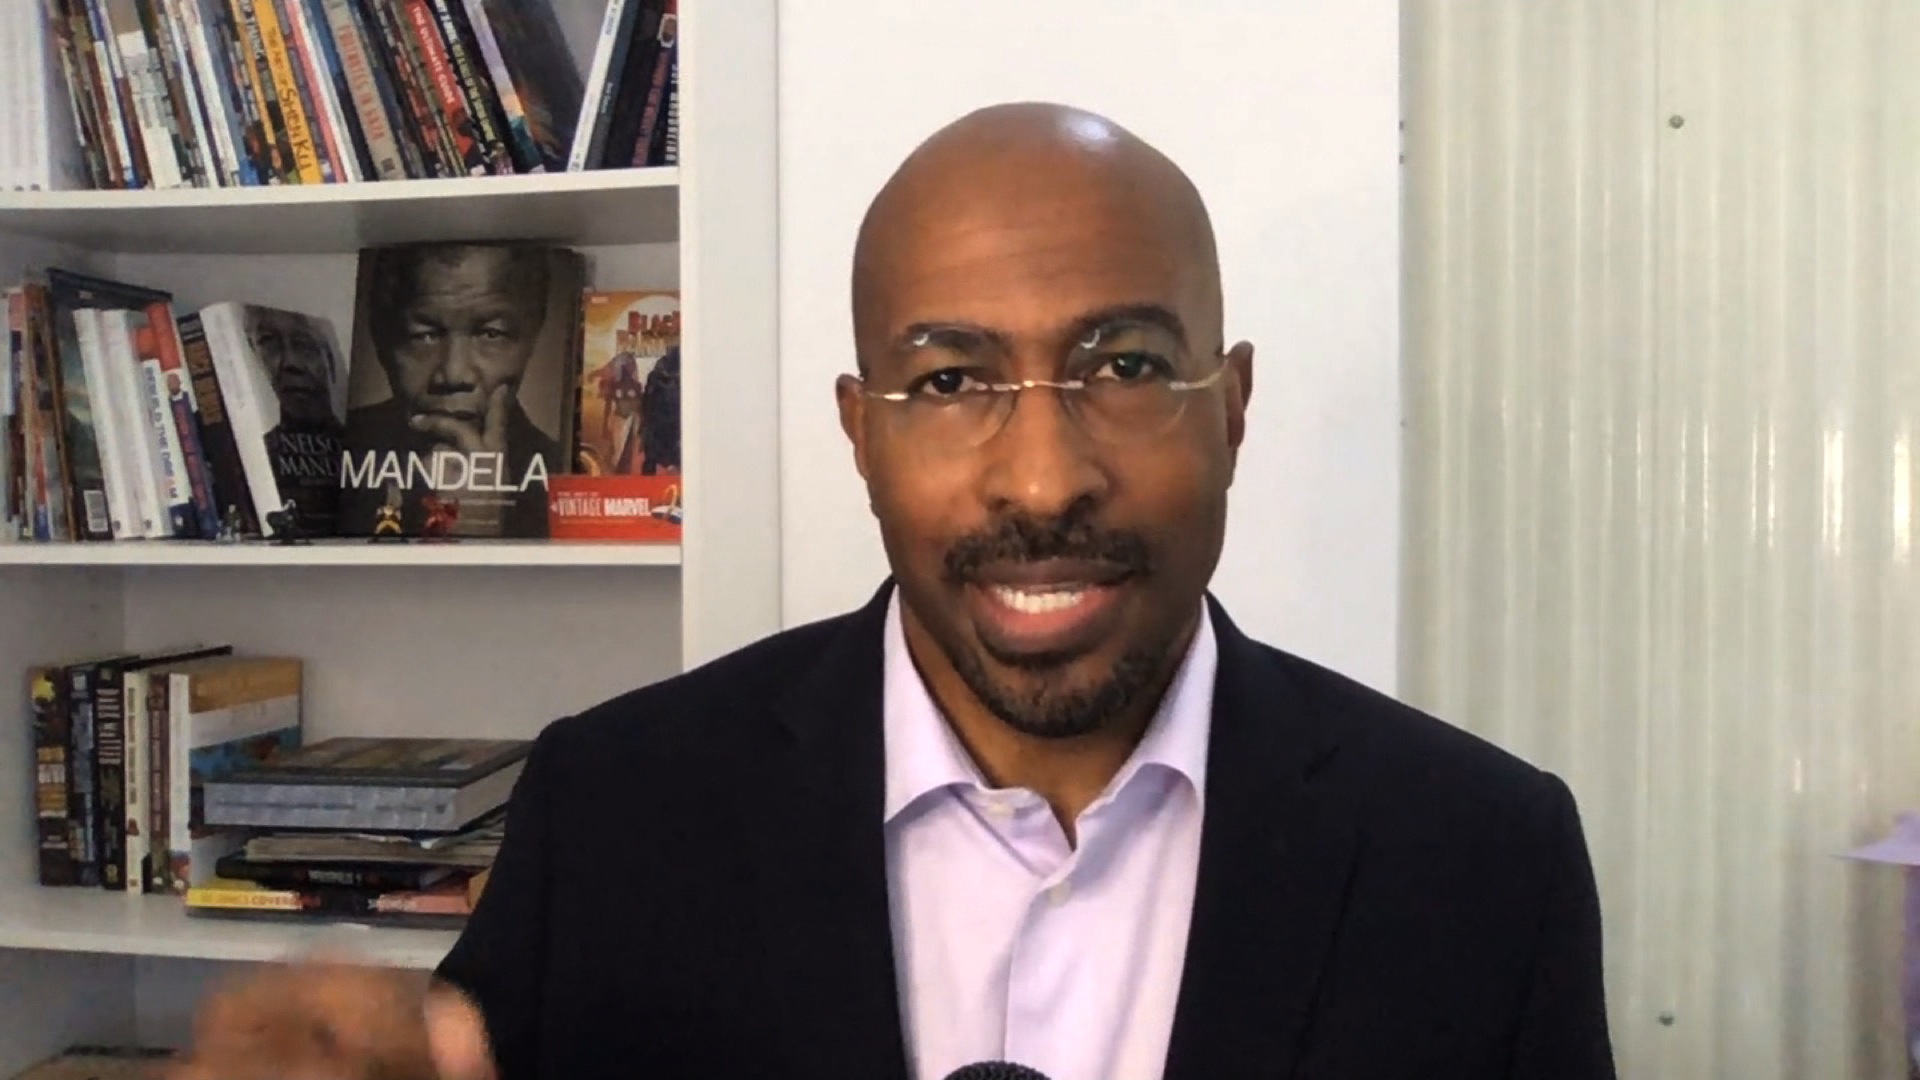 Van Jones Calls Out The Dehumanization Of African American Men Cnn Video